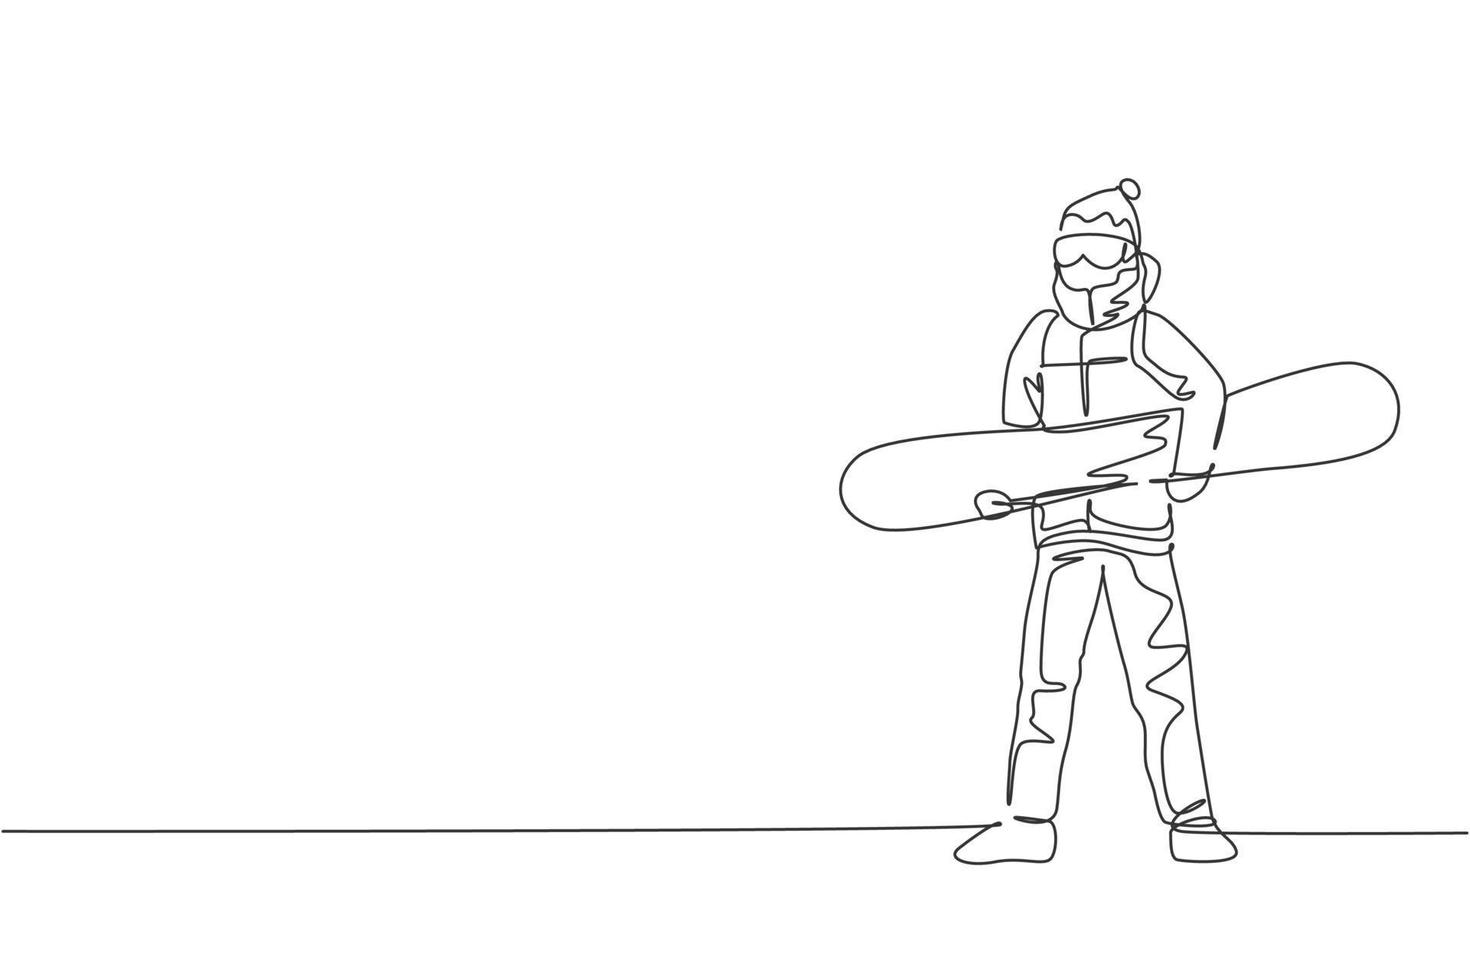 en kontinuerlig linje ritning av ung sportig man snowboardåkare som håller snowboard i alperna snöiga pulverberget. vinter livsstil sport koncept. dynamisk enkel linje rita design vektor grafisk illustration